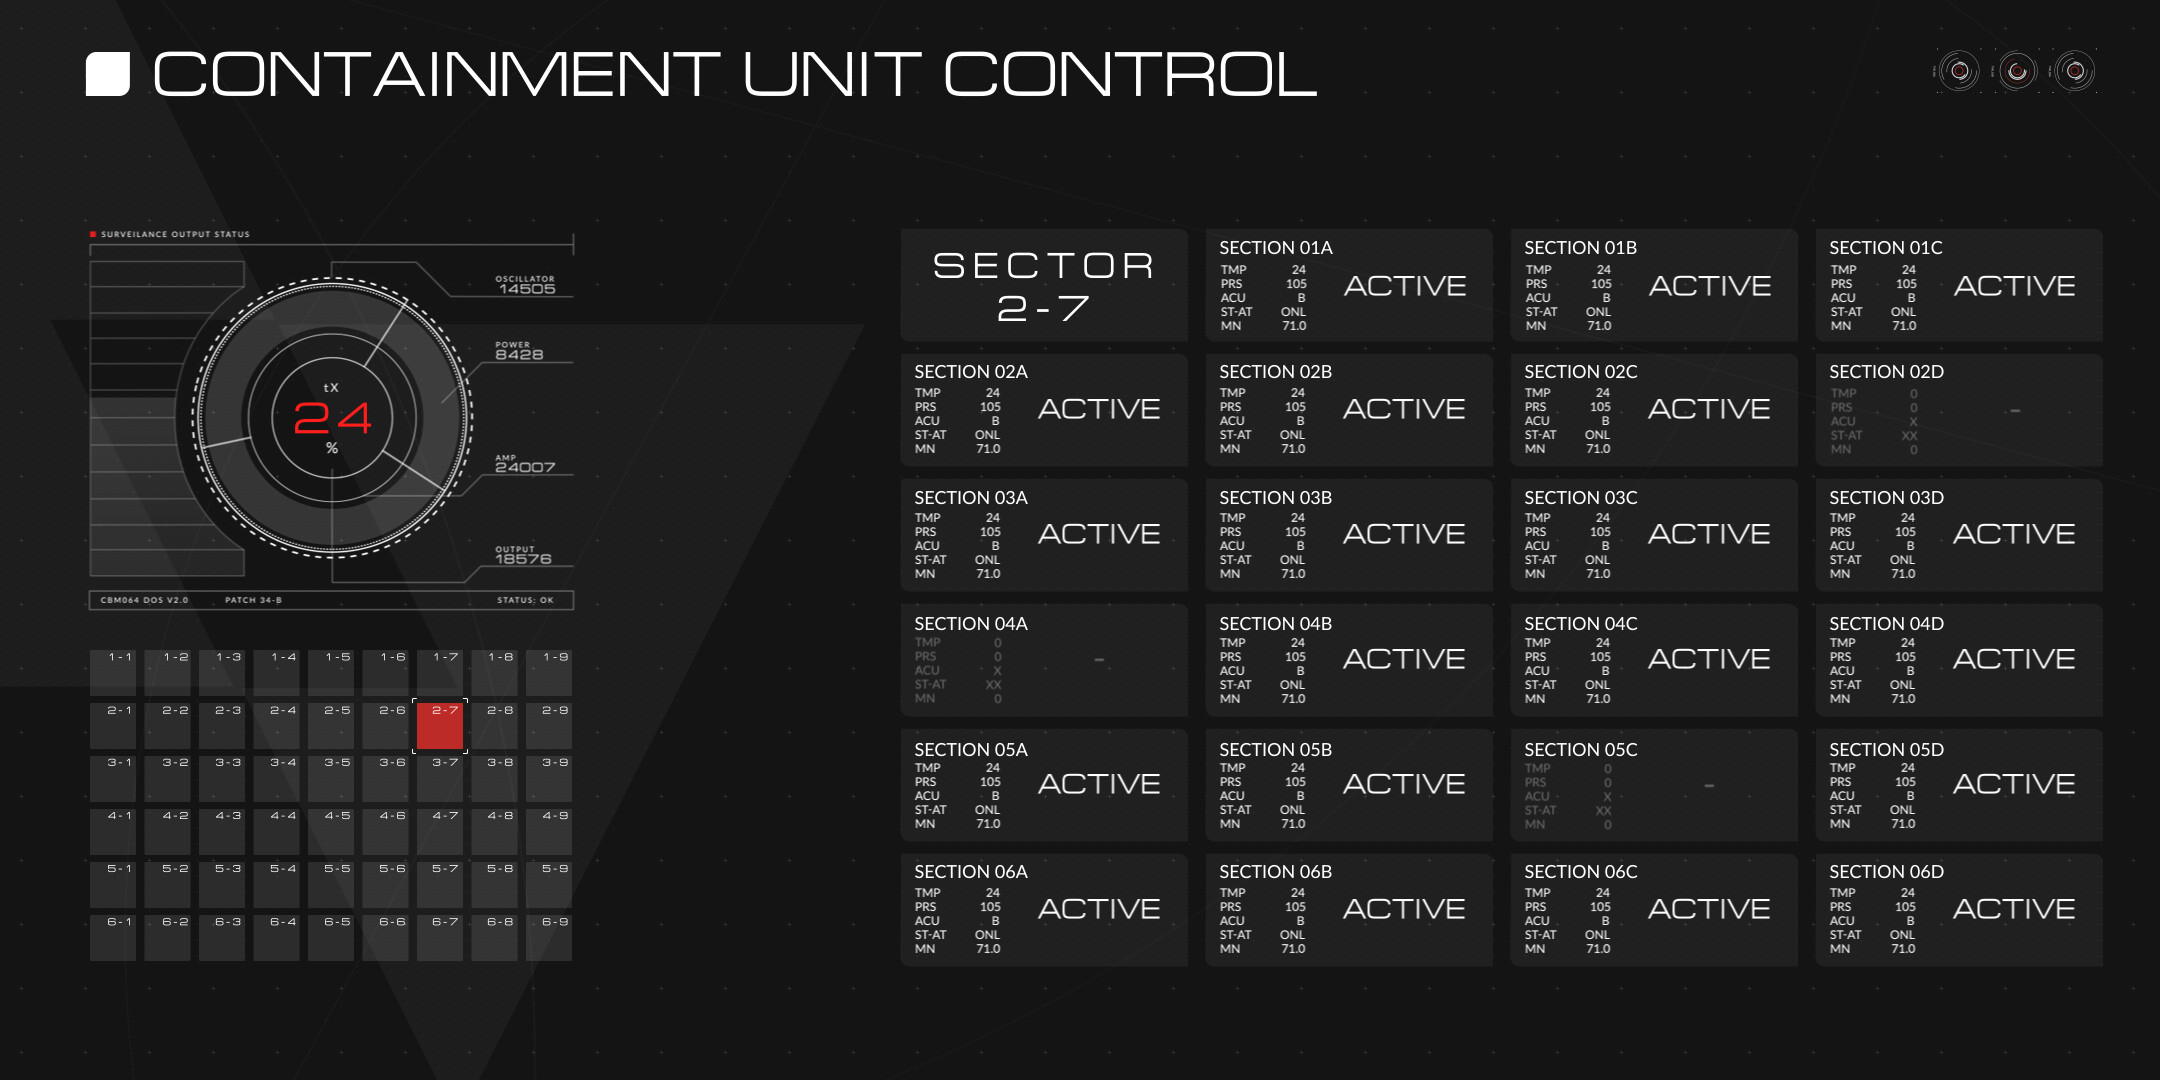 Prisoner X - Containment Unit Control
Additional graphics by Joachim Ljunggren (pixeldust.se)